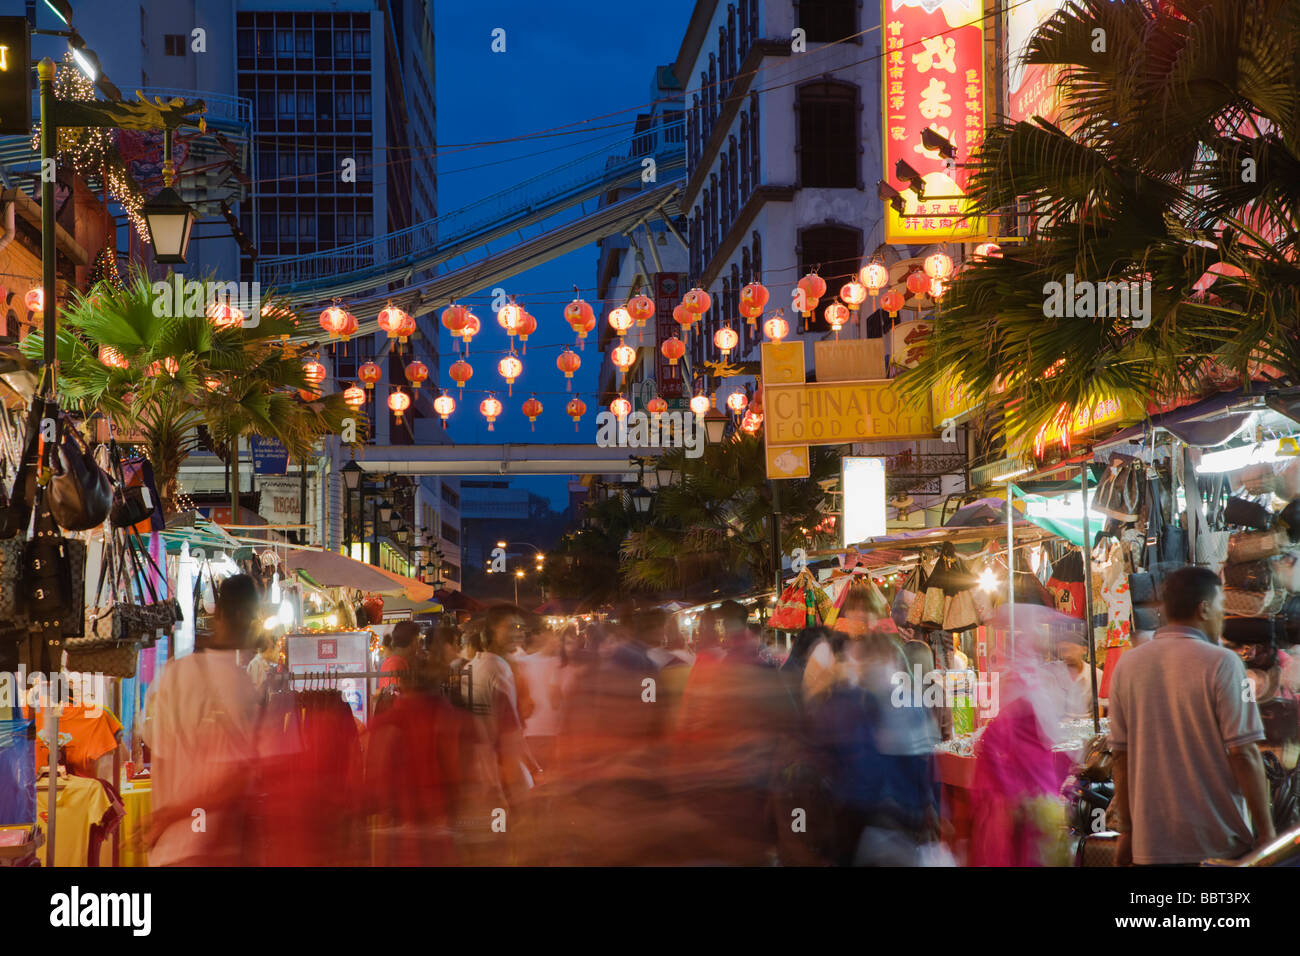 Lanterns hang over an open marketplace on Jalan Lekir alongside Jalan  Petaling Street in Chinatown, Kuala Lumpur, Malaysia Stock Photo - Alamy